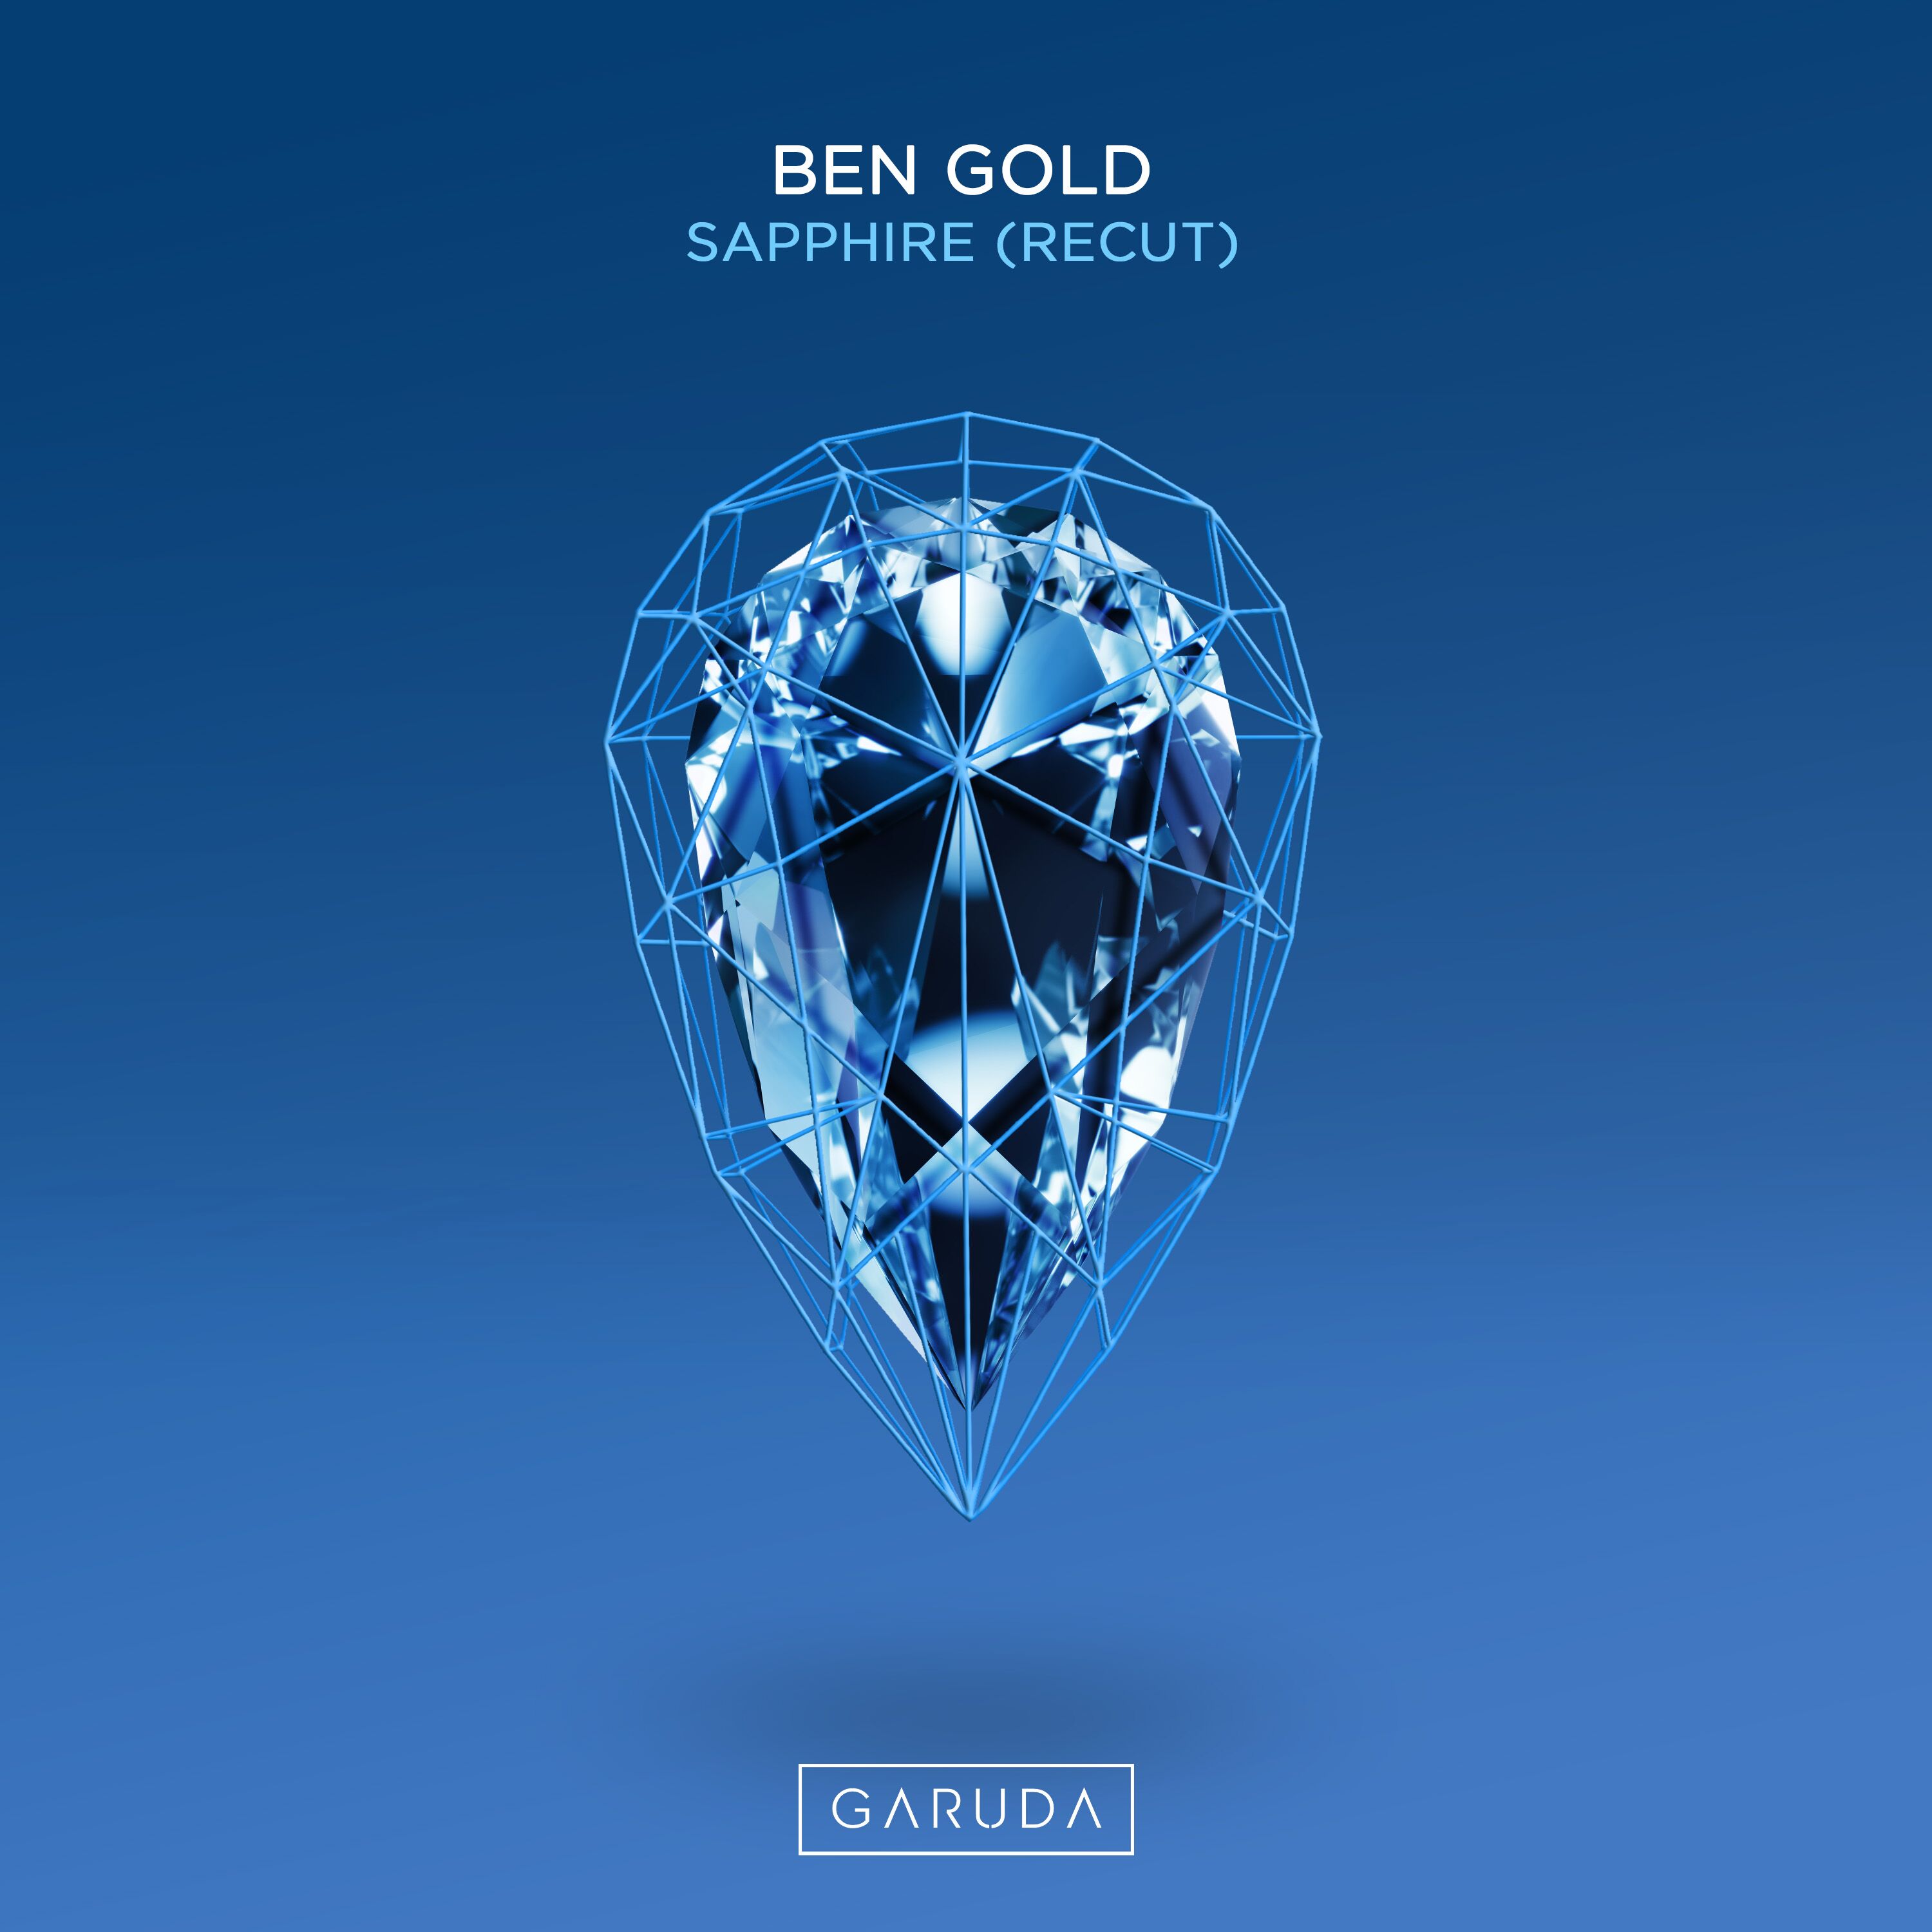 Ben Gold presents Sapphire (Recut) on Garuda